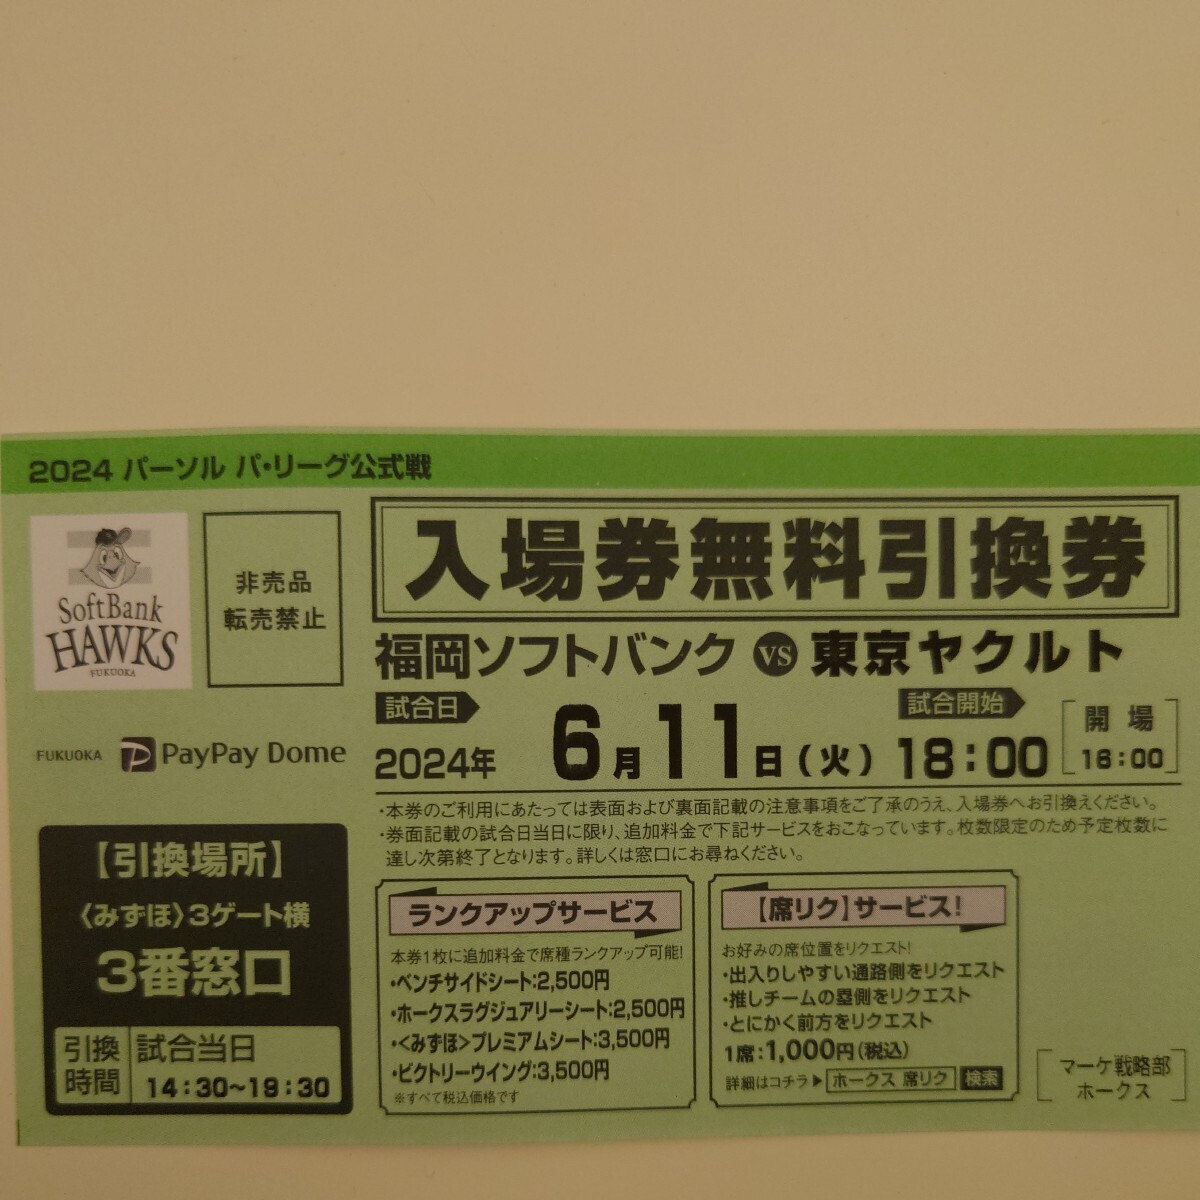 6/11( огонь ) Fukuoka SoftBank Hawks vs Tokyo Yakult Swallows входить место бесплатный талон 1 листов Fukuoka PayPay купол 